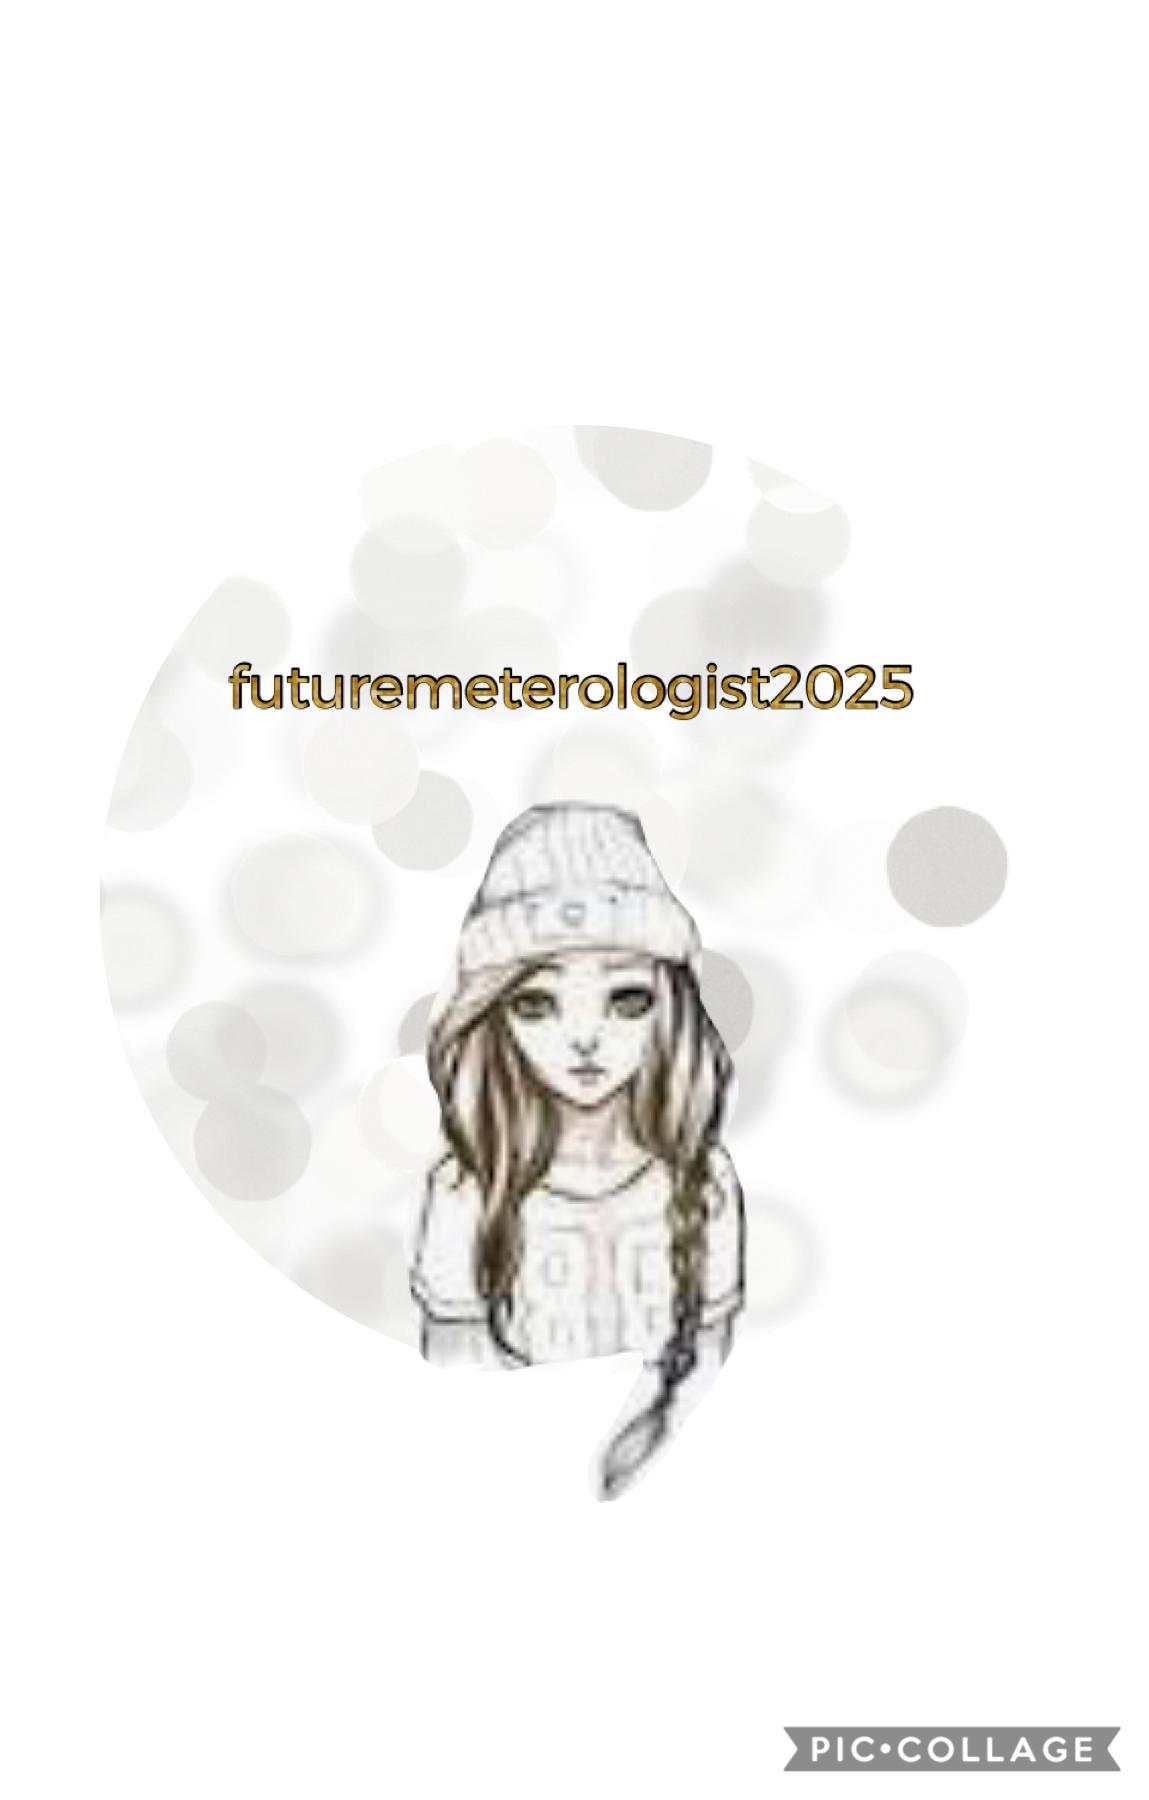 Icon for futuremeterologist2025
For coming second in icon contest